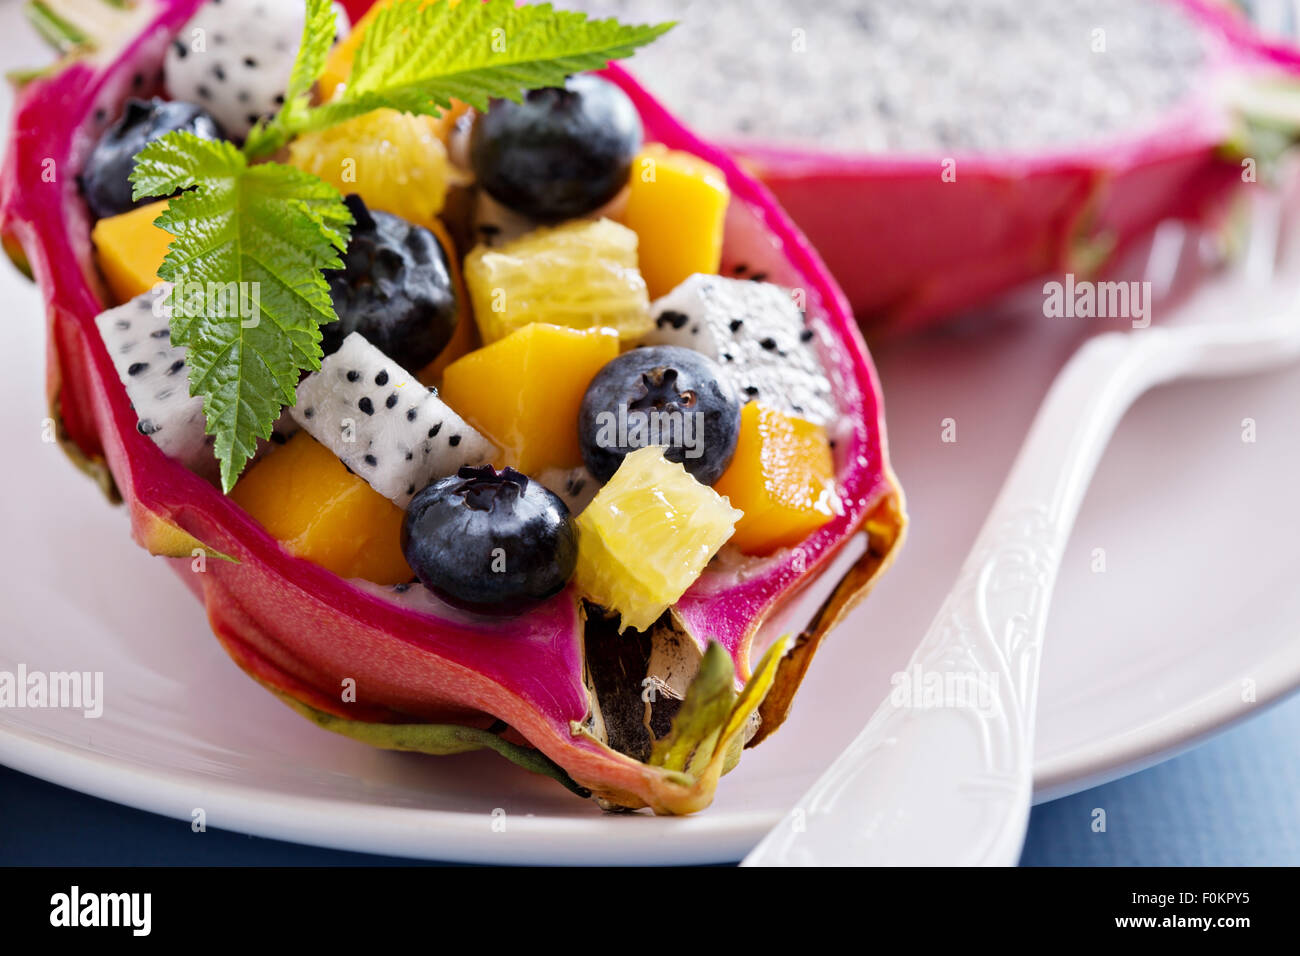 Tropical fruit salad served inside a dragon fruit Stock Photo